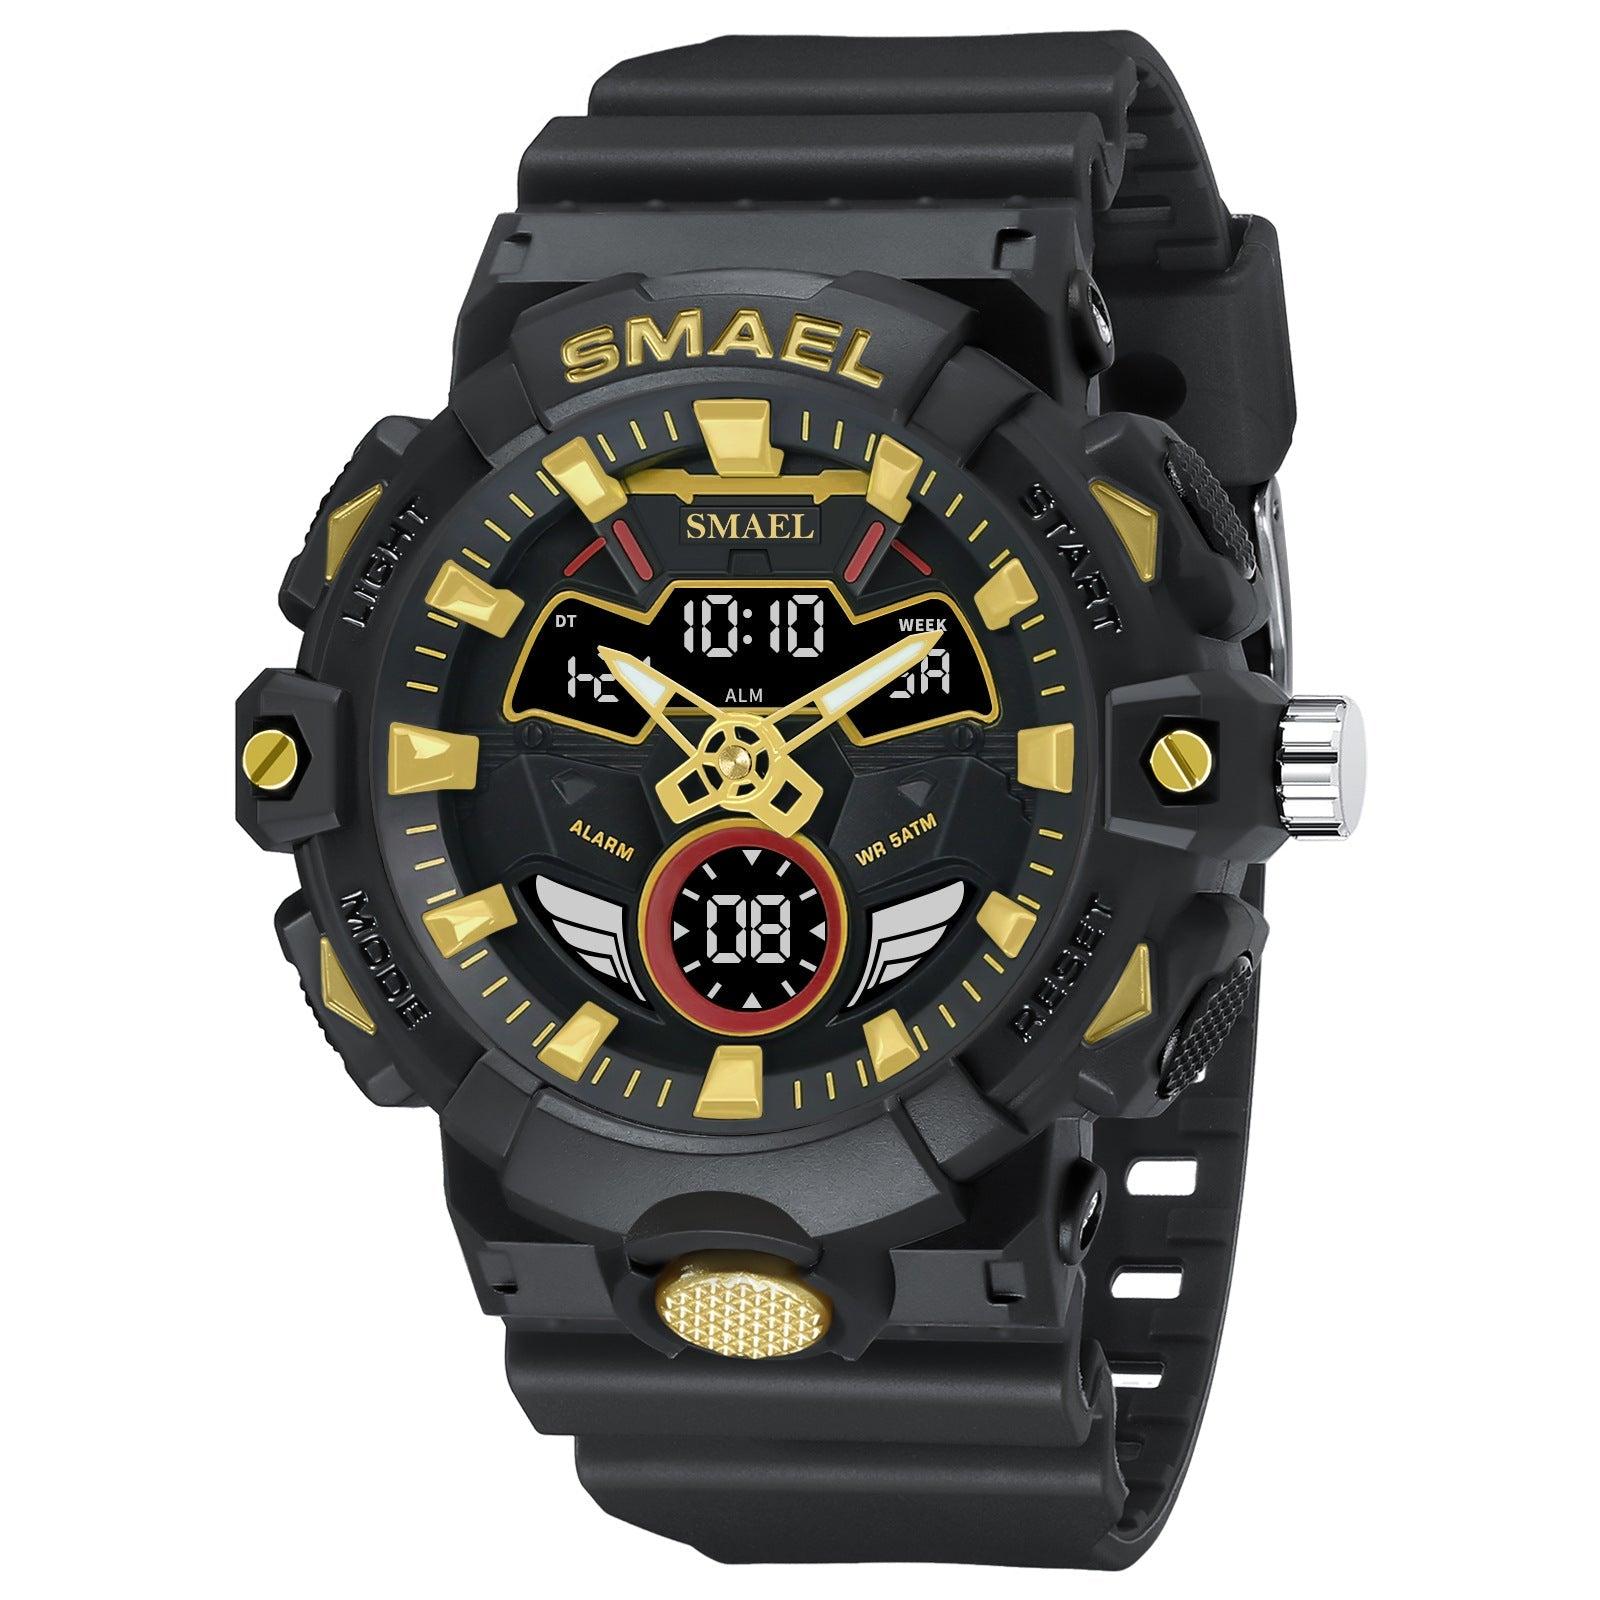 SMAEL watch 1545 reloj Sports Dual| Alibaba.com